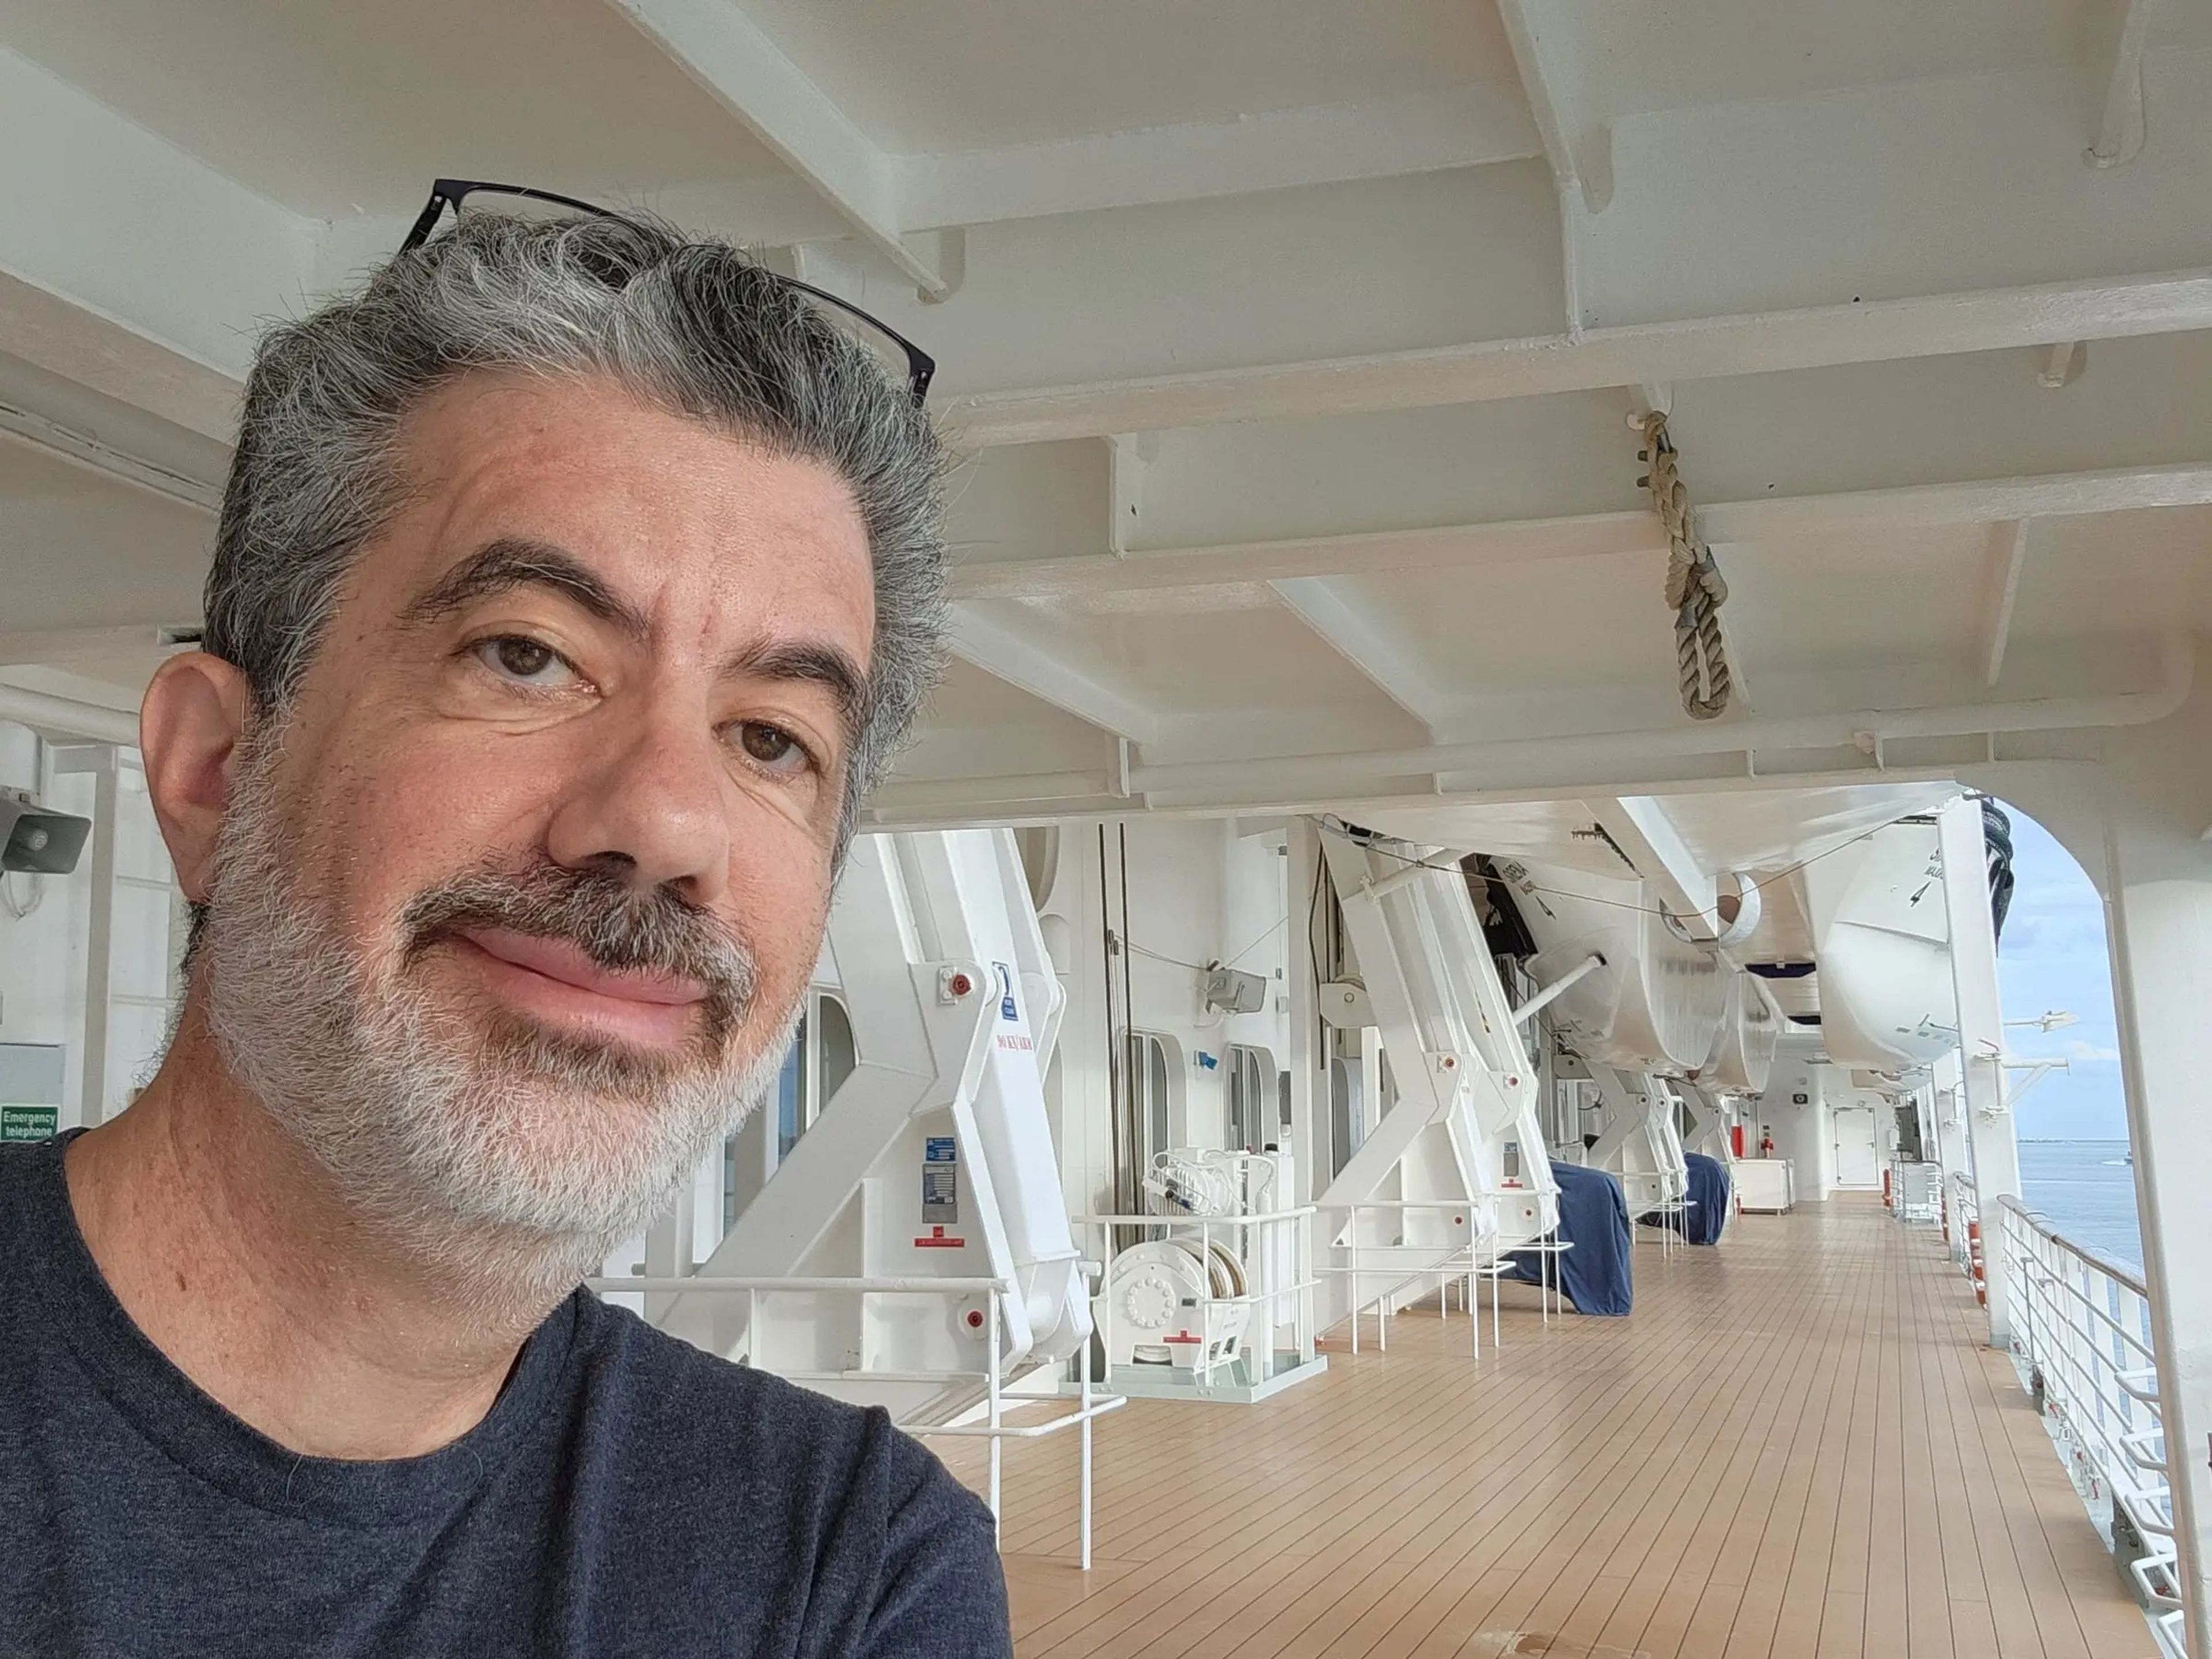 a man takes a selfie on a cruise ship